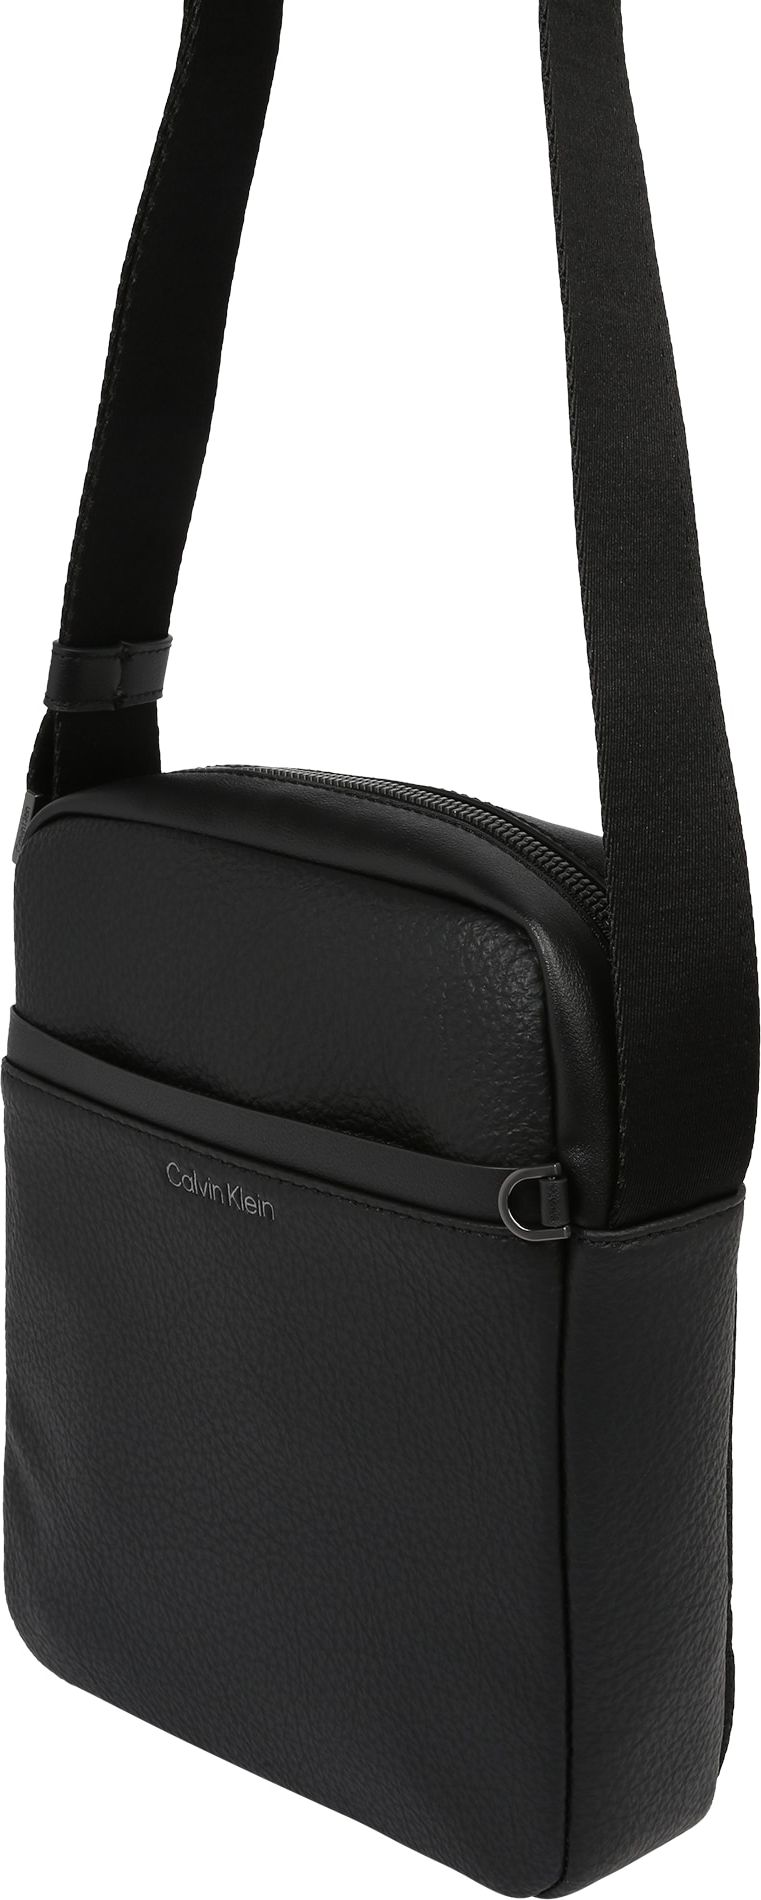 Calvin Klein Tasche černá